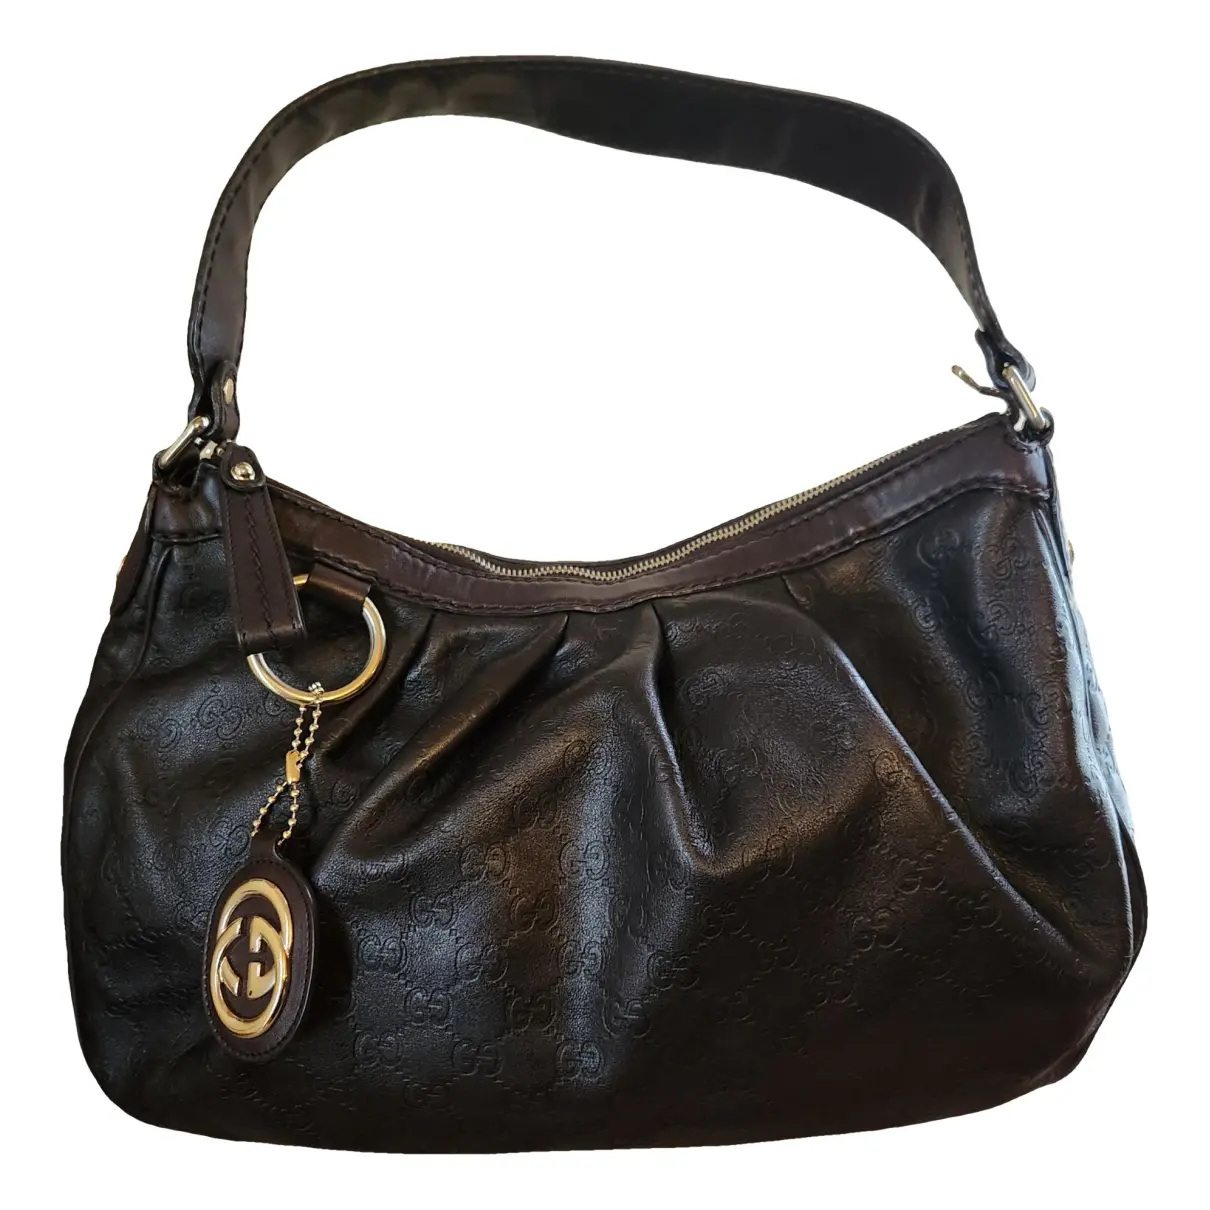 Sukey leather handbag